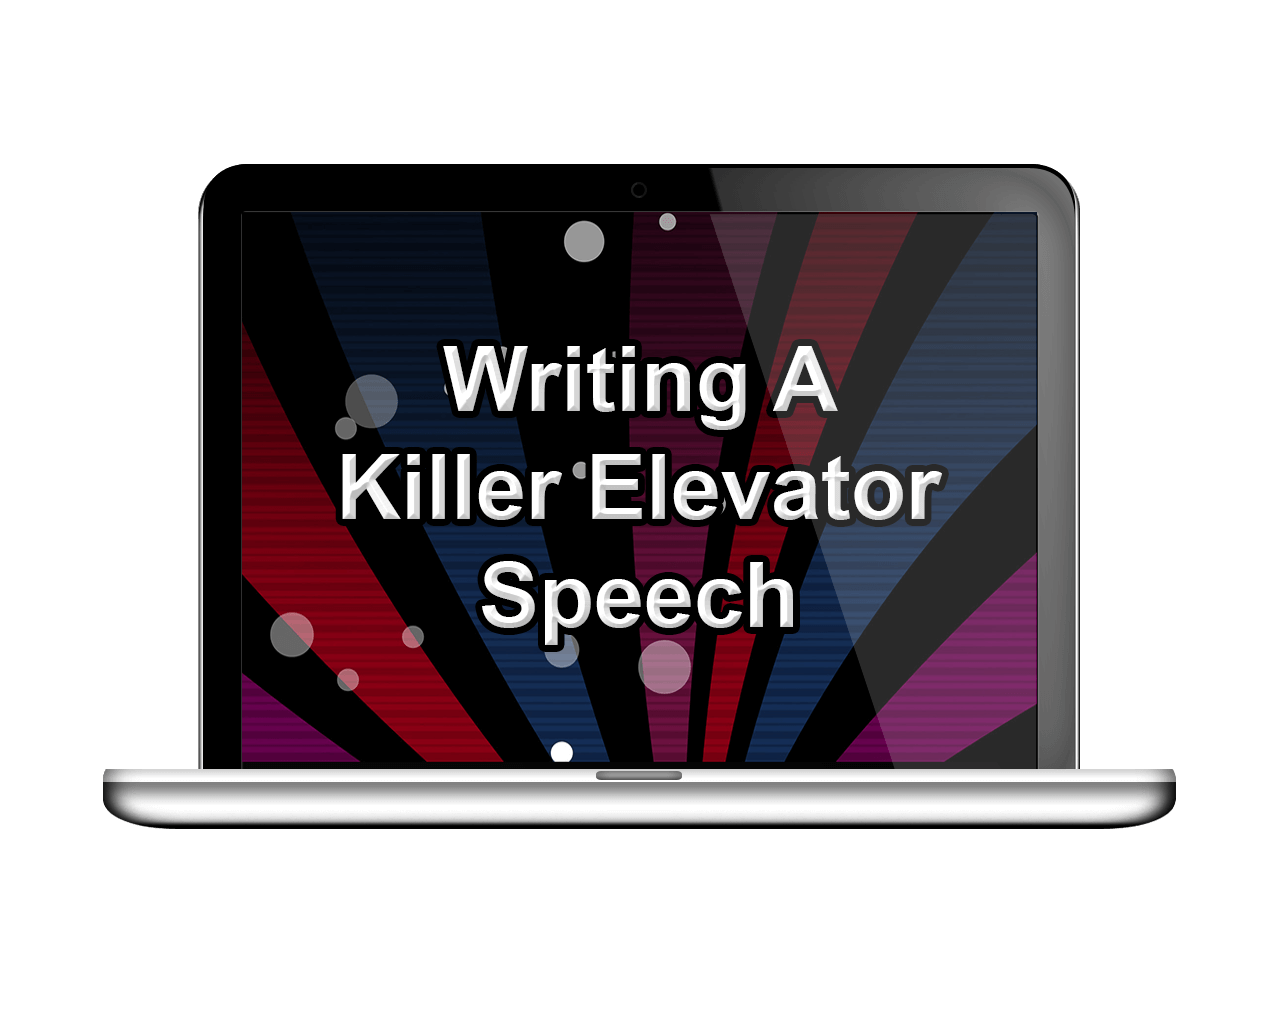 Writing A Killer Elevator Speech Image